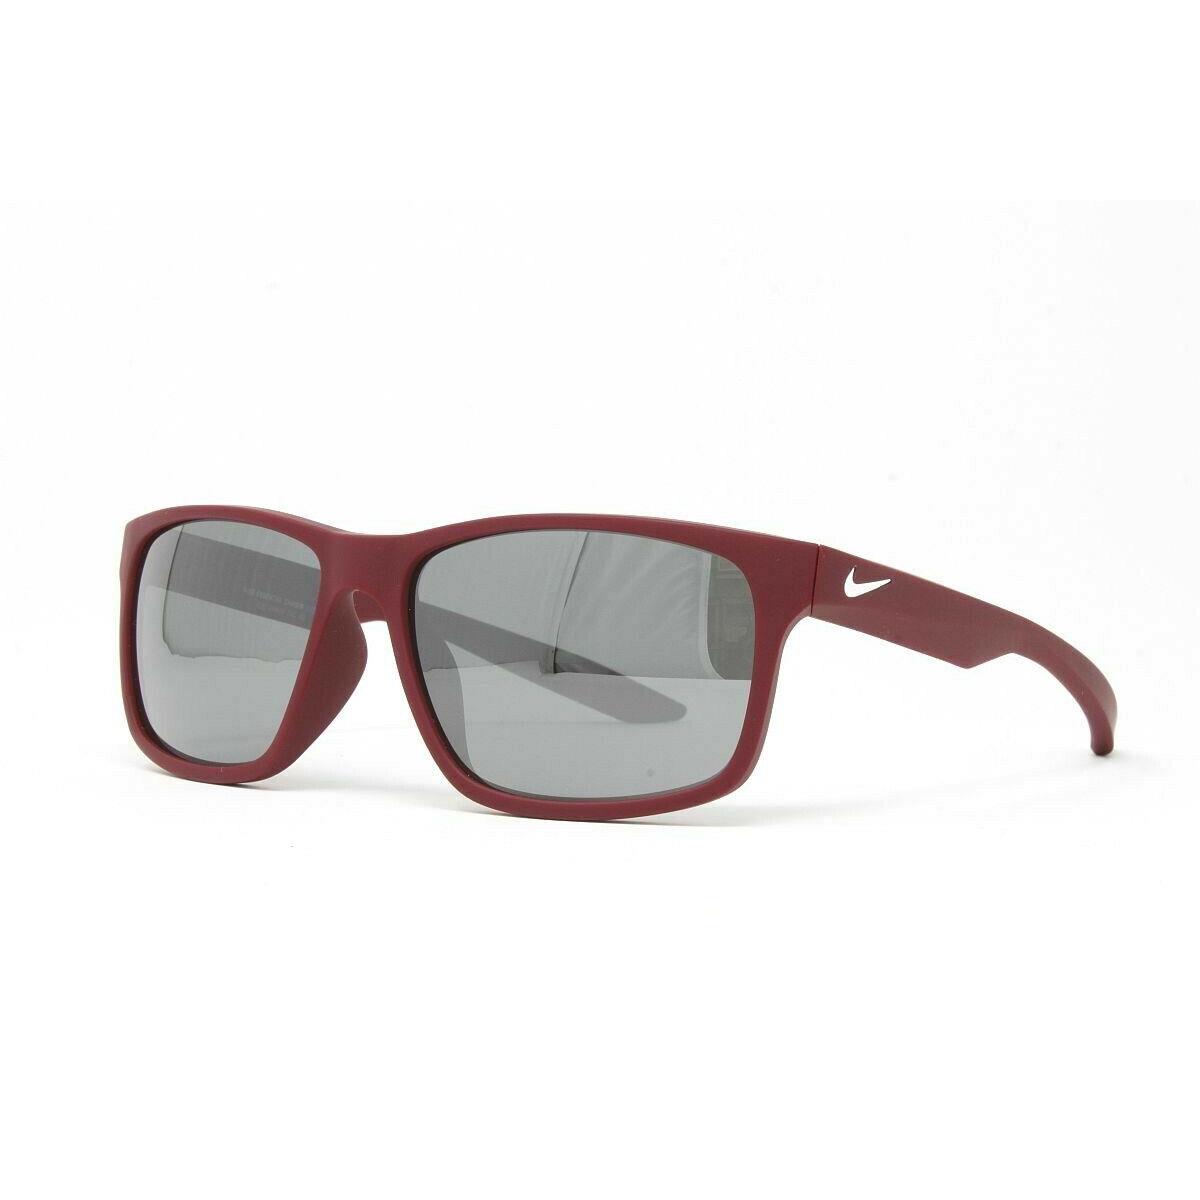 Nike Men`s Sunglasses Essential Chaser Matte Cardinal W/grey Silver Lens 59mm - Frame: Red, Lens: Gray